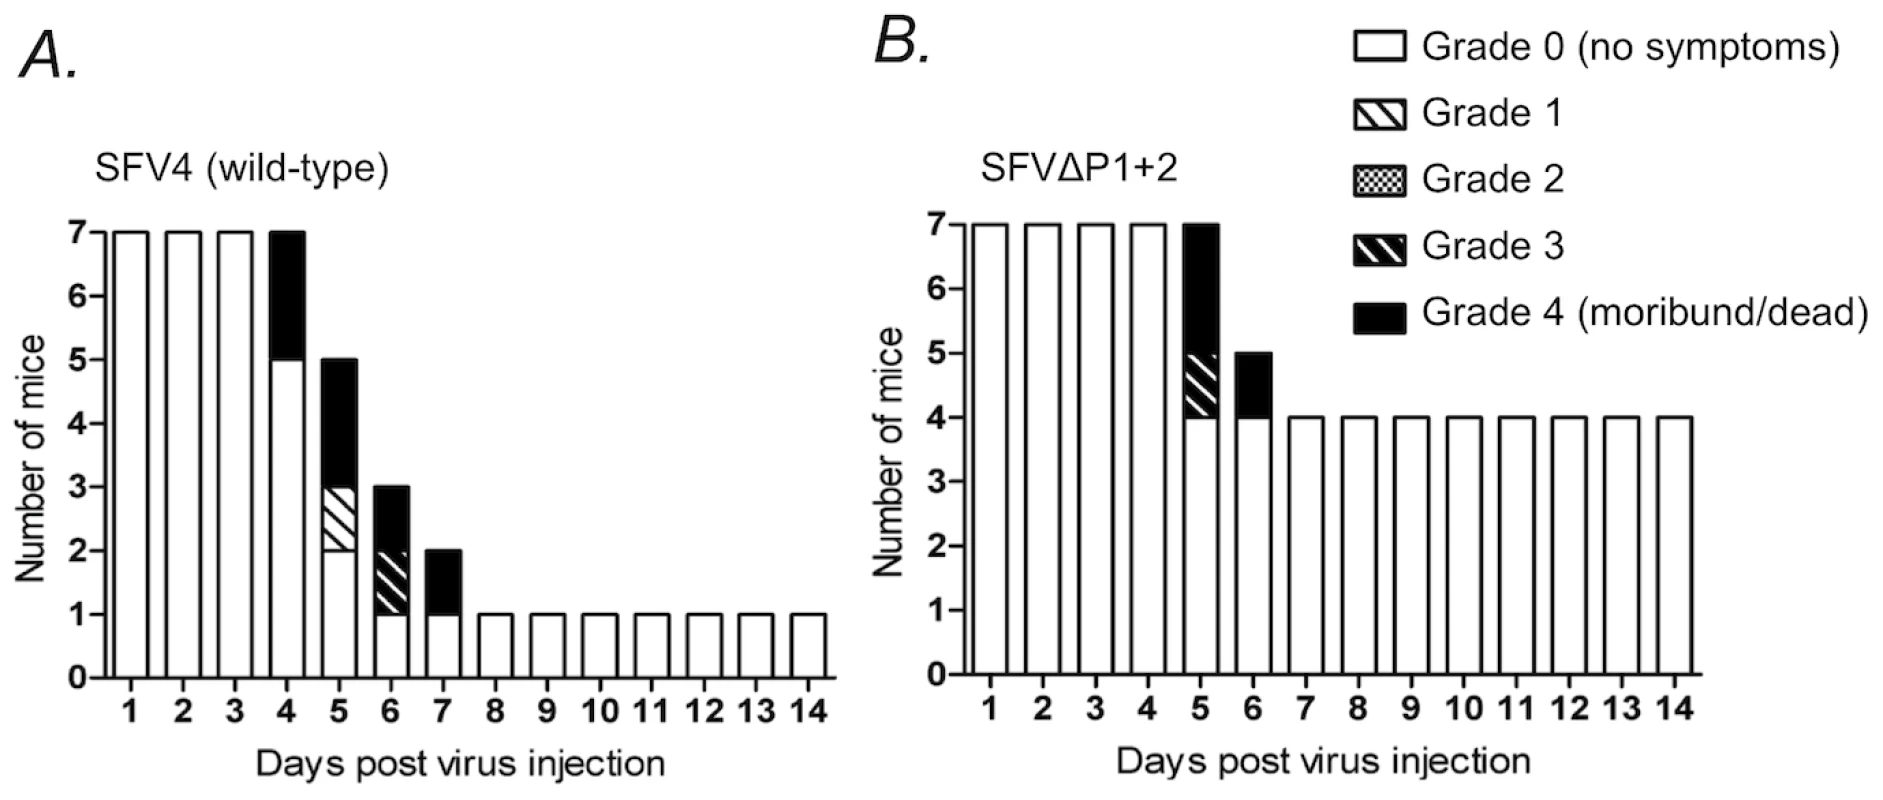 Neurologic symptoms and mortality in Balb/c mice following SFV infection.